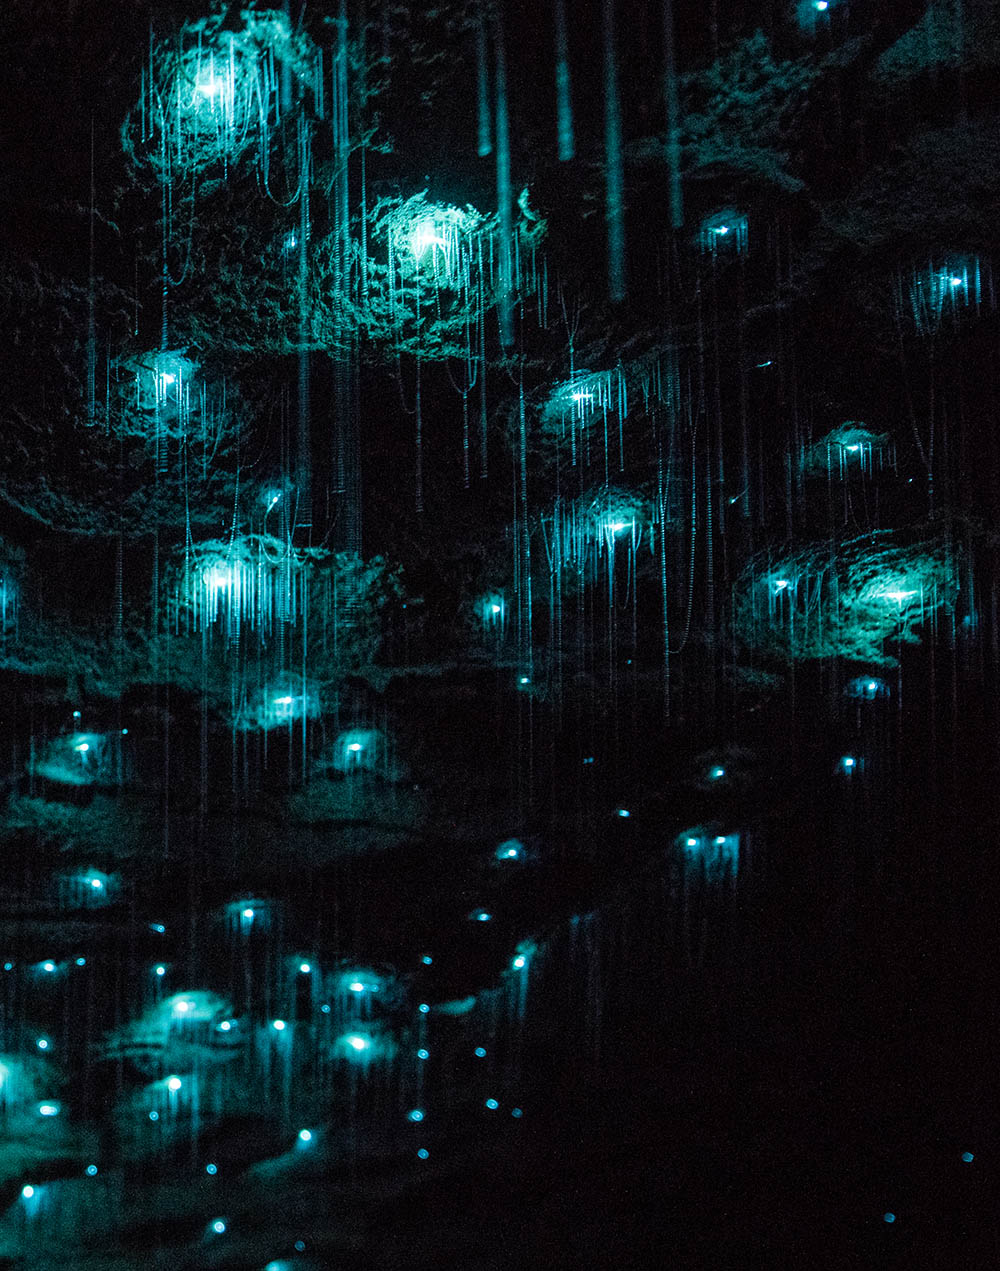 Waitomo Glowworm Cave Tour in New Zealand